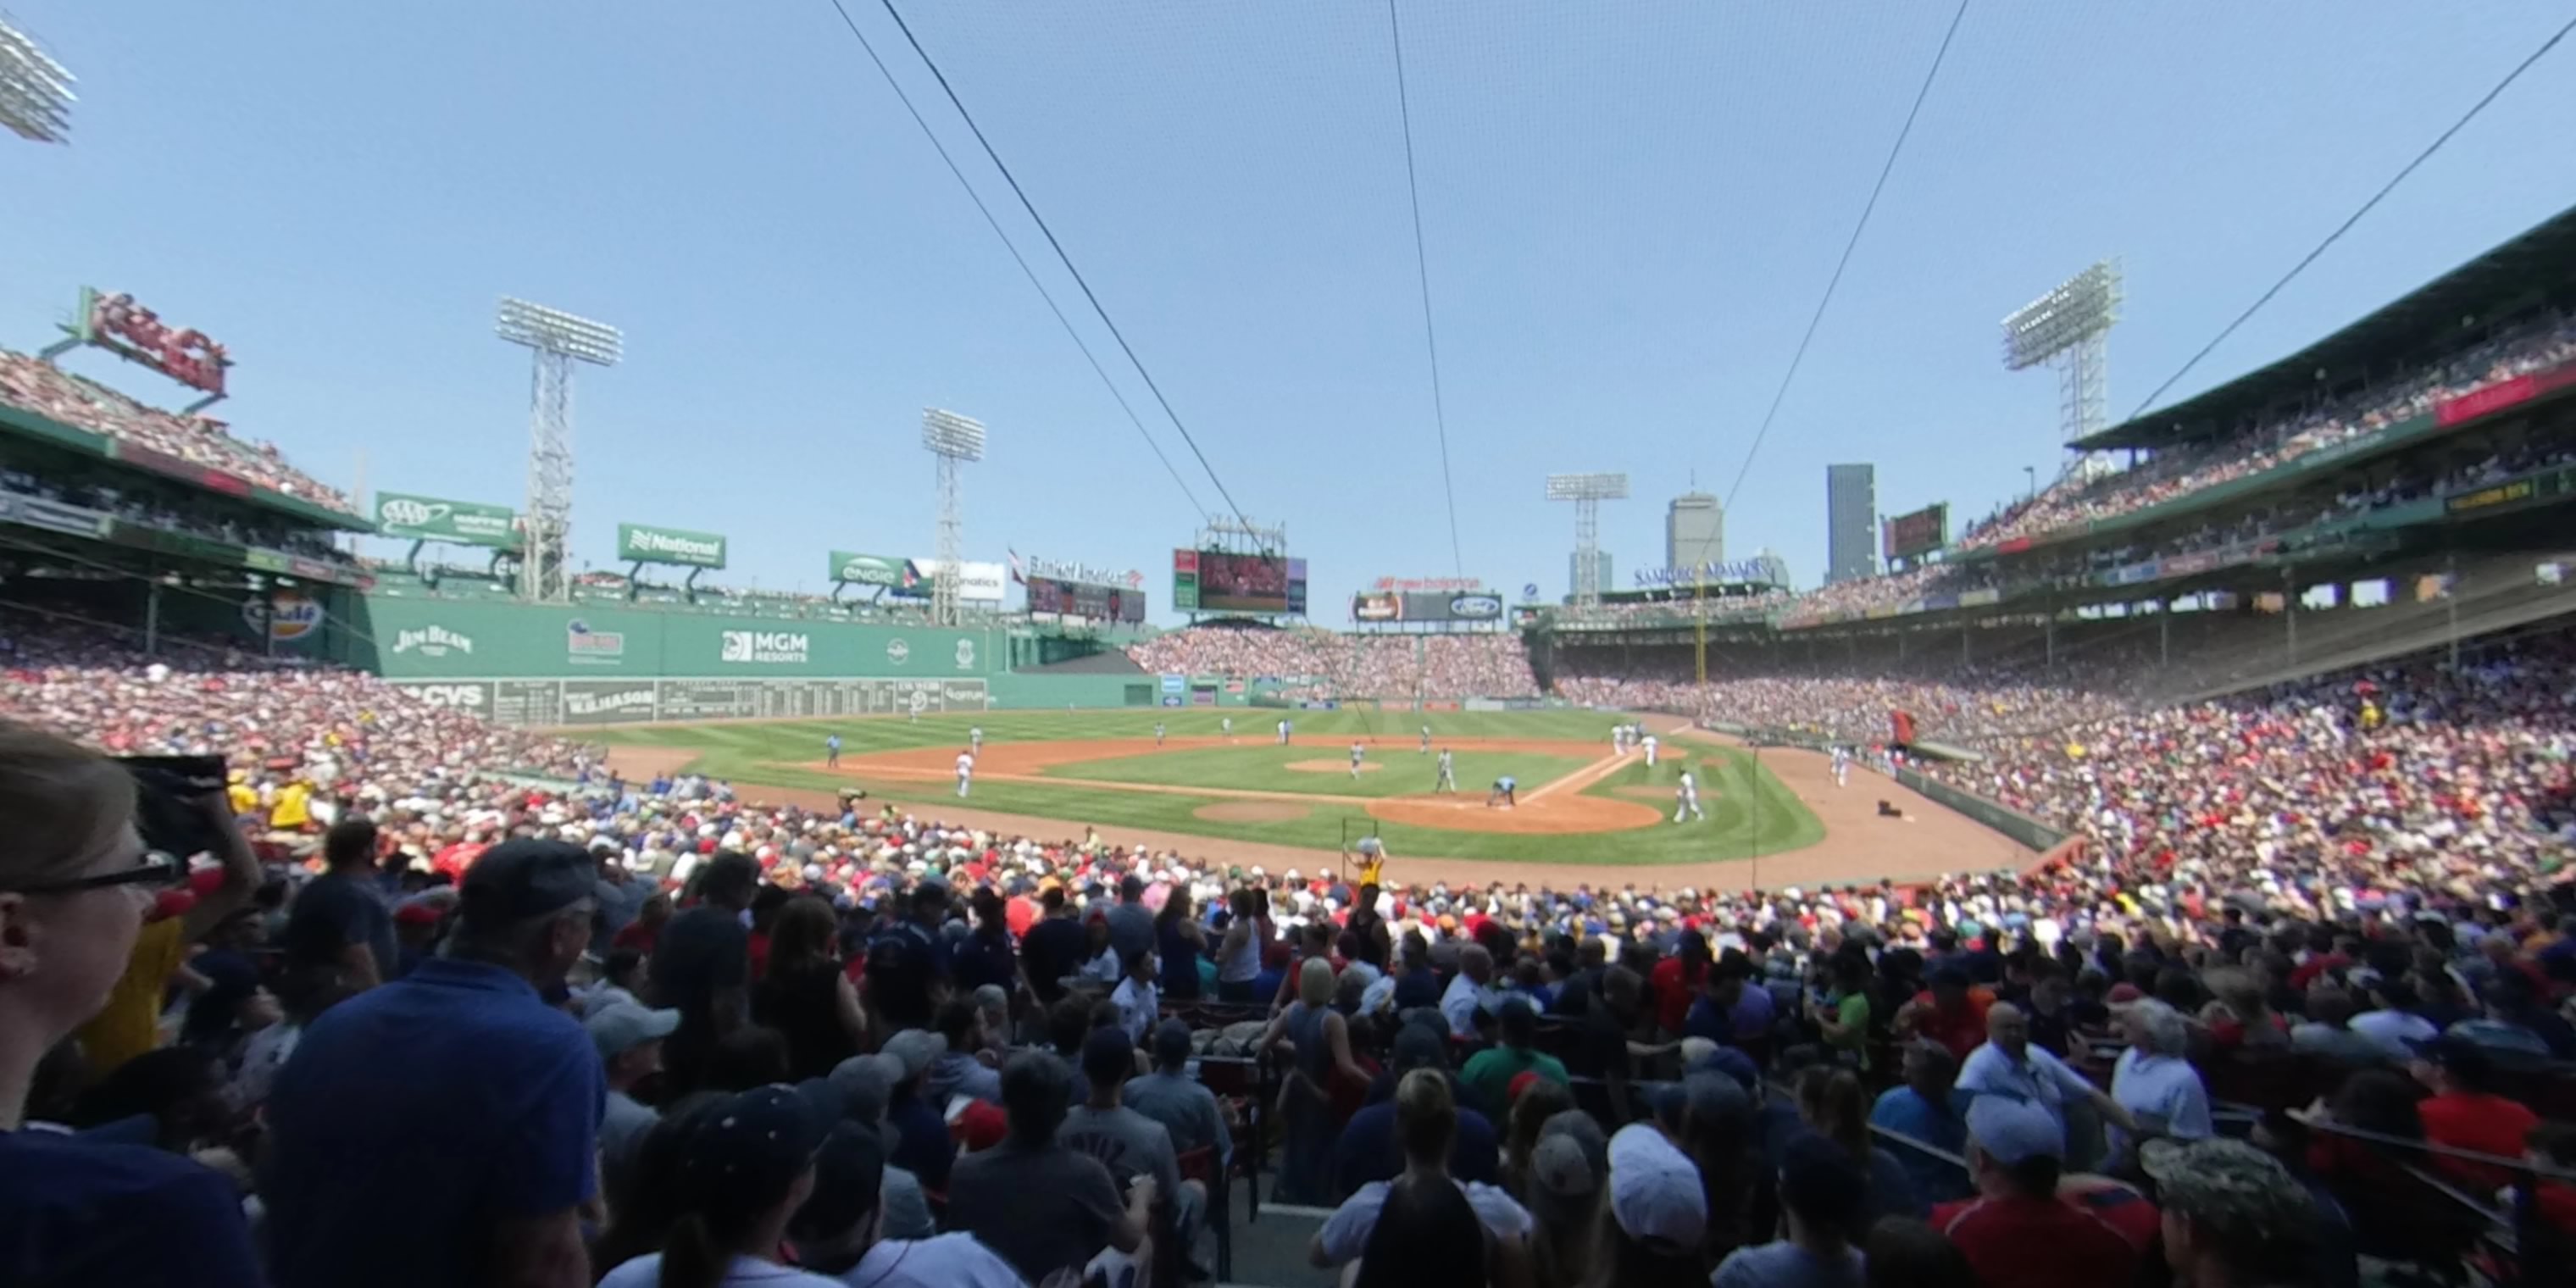 loge box 134 panoramic seat view  for baseball - fenway park